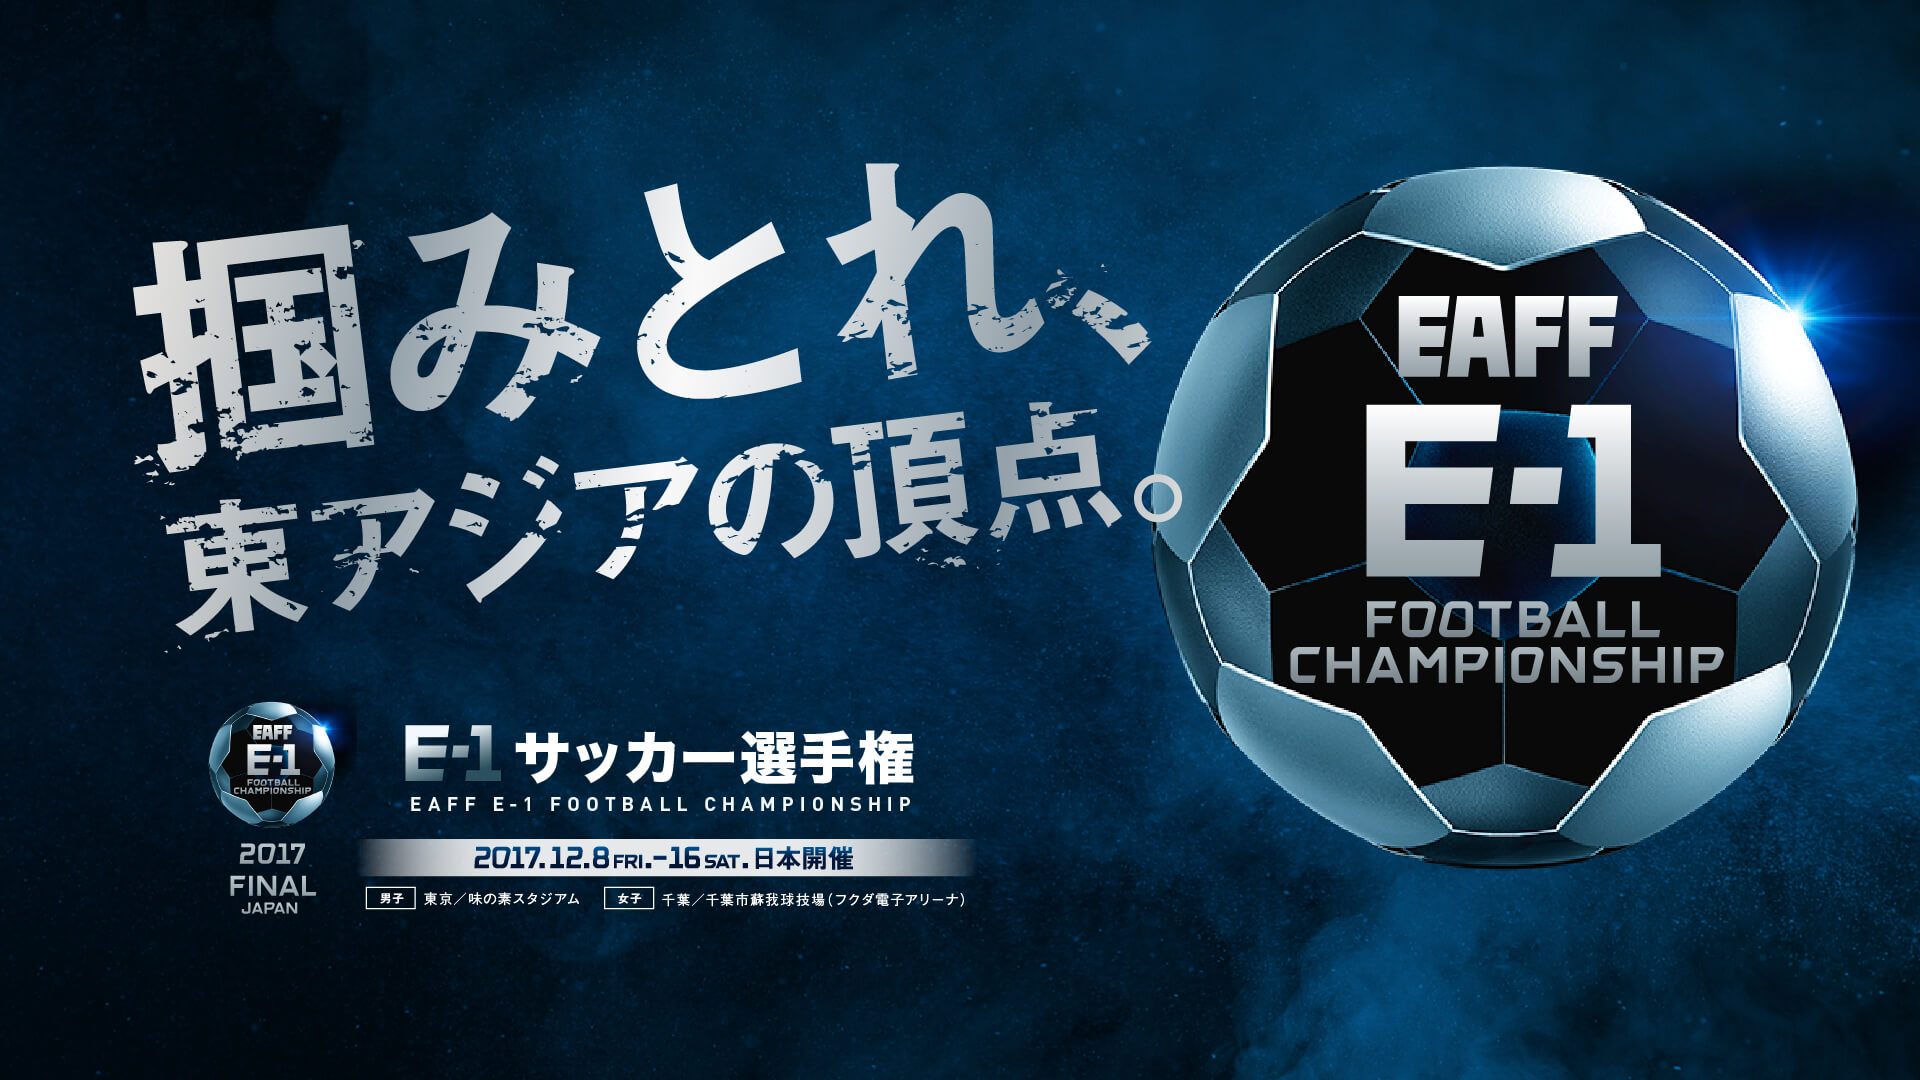 E-1 サッカー選手権 EAFF E-1 FOOTBALL CHAMPIONSHIP